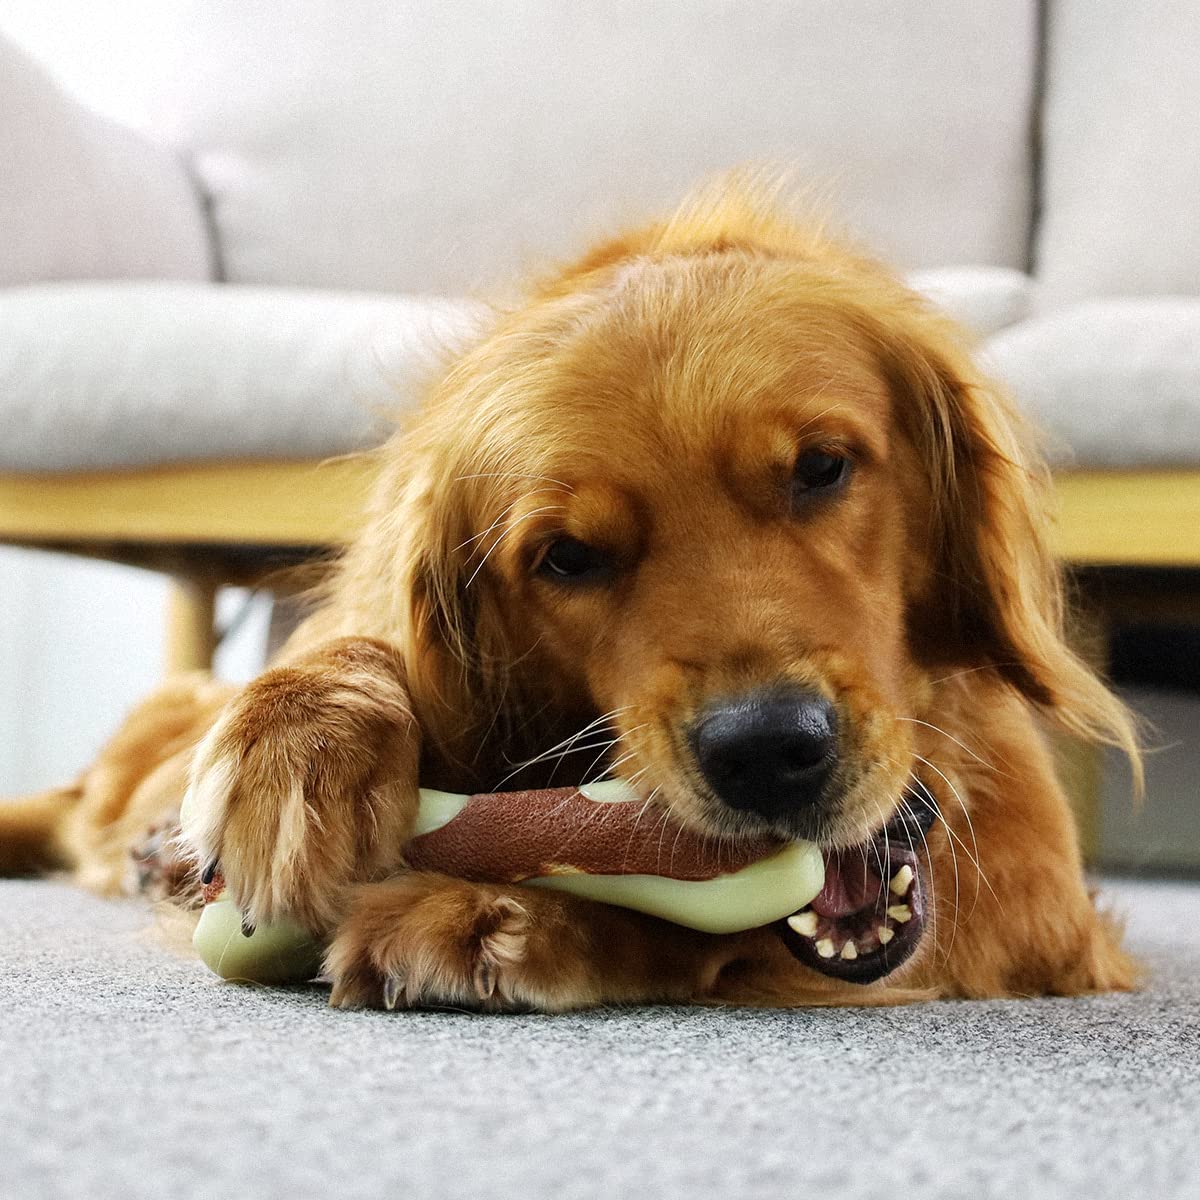 Tikaton Dog Teething Chew Toys Bones-Peanut Flavor